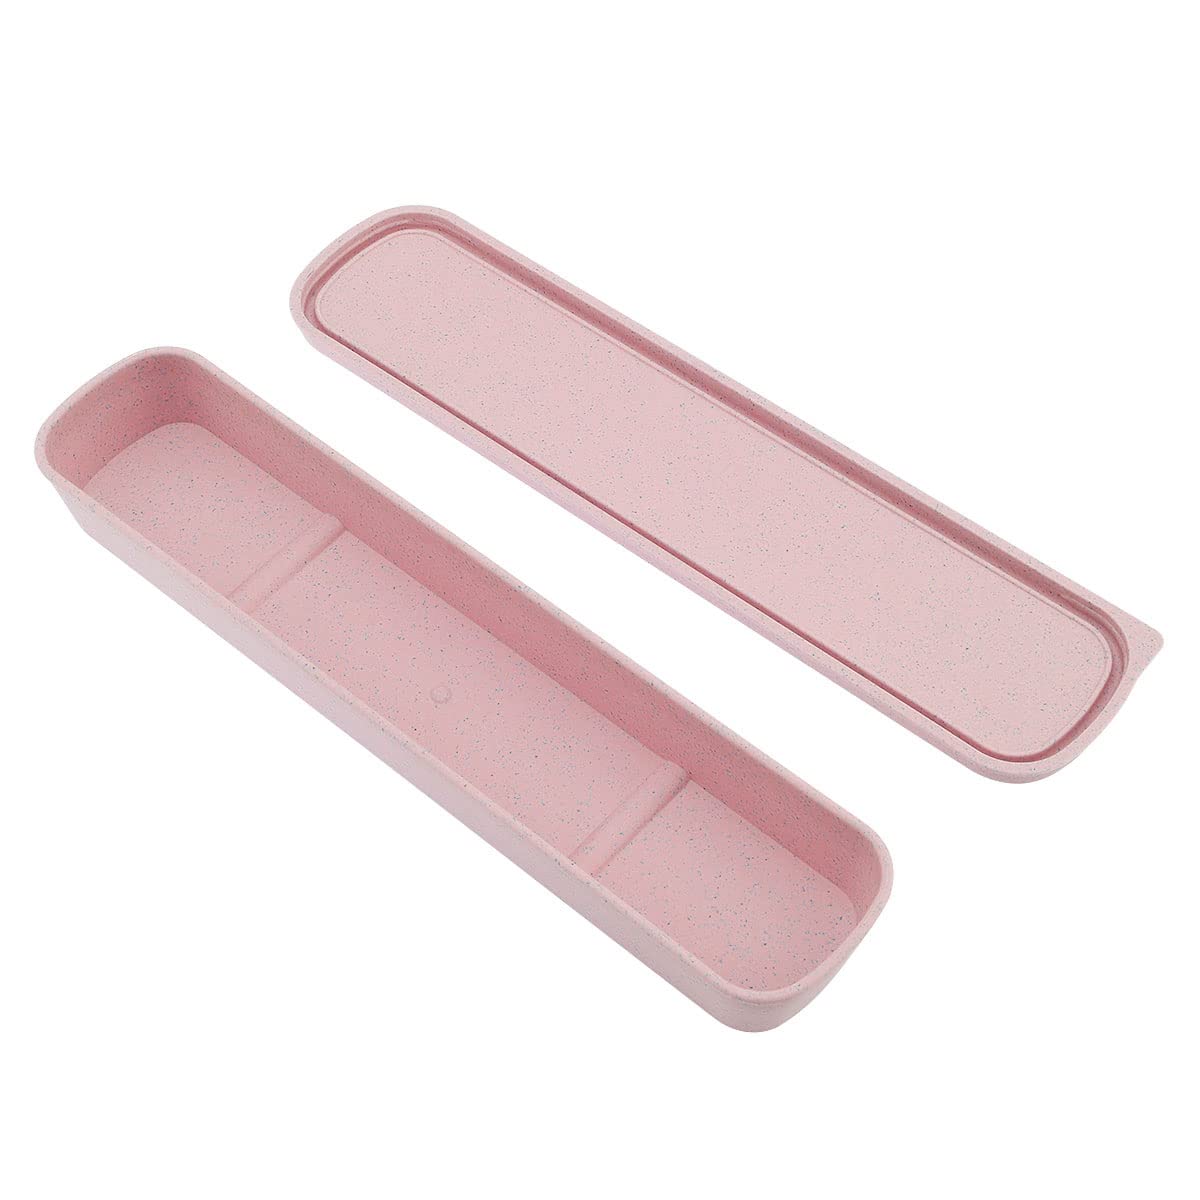 OriGlam 1pcs Portable Flatware Box Travel Tableware Storage Case Box, Utensil Case Flatware Storage Box for Cutlery Kit (Pink)